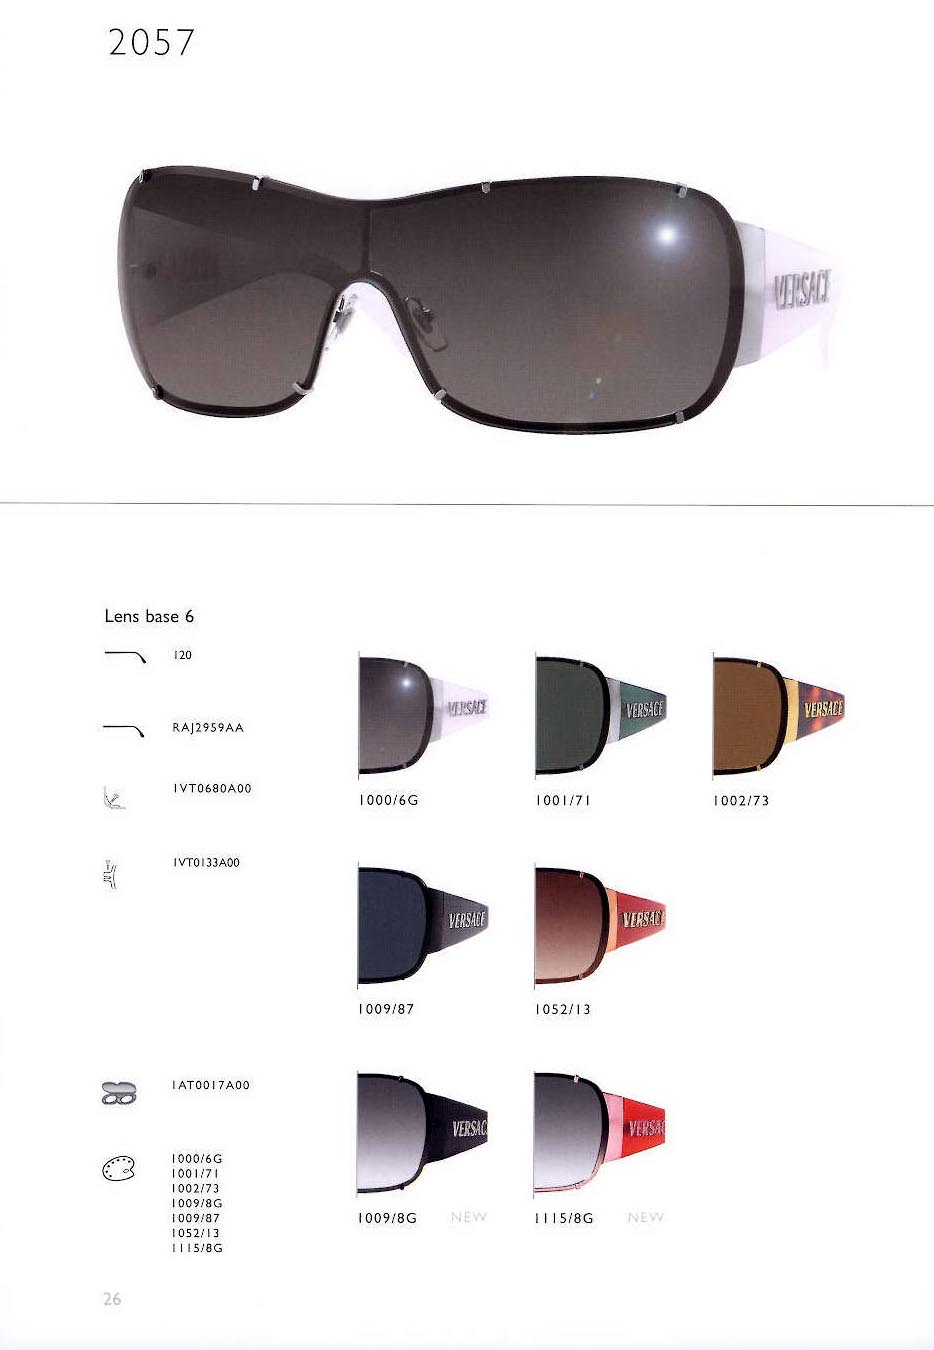 Sunglasses Versace 2057 10098G